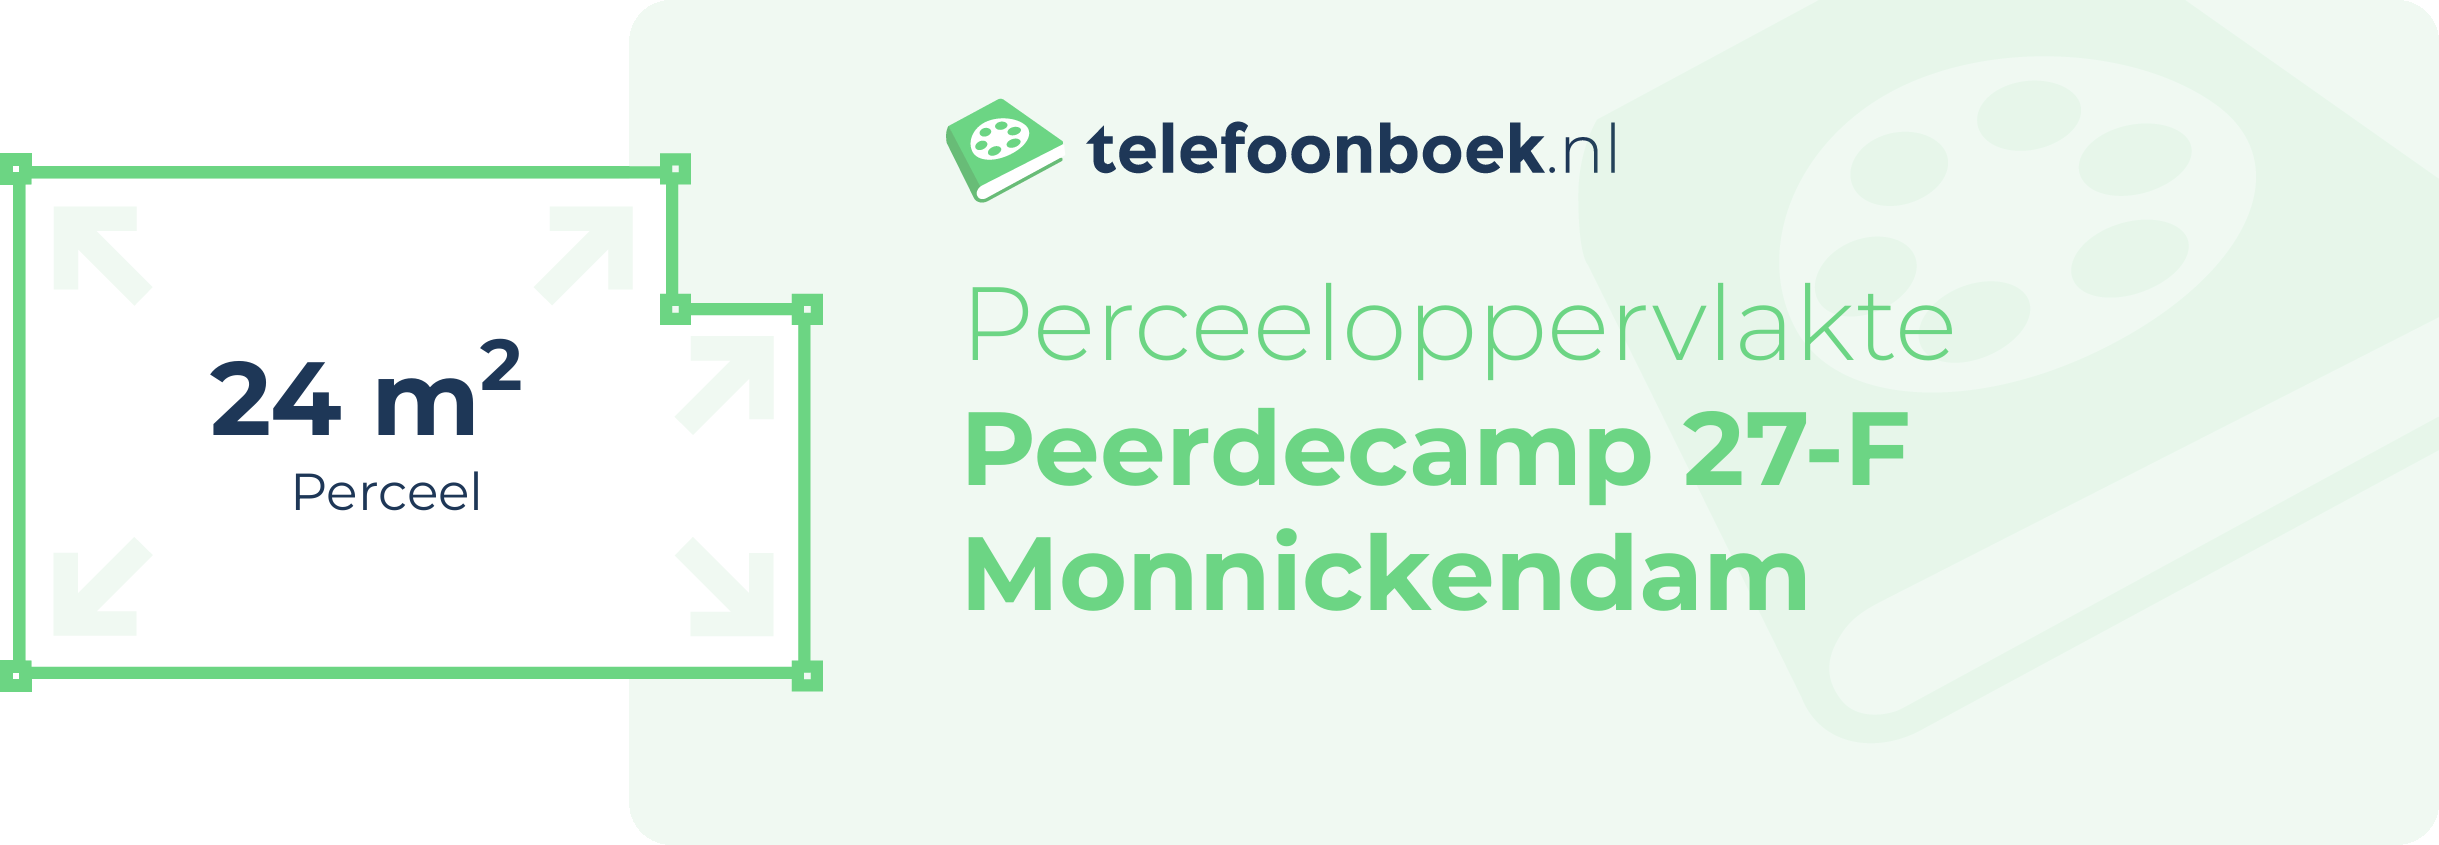 Perceeloppervlakte Peerdecamp 27-F Monnickendam